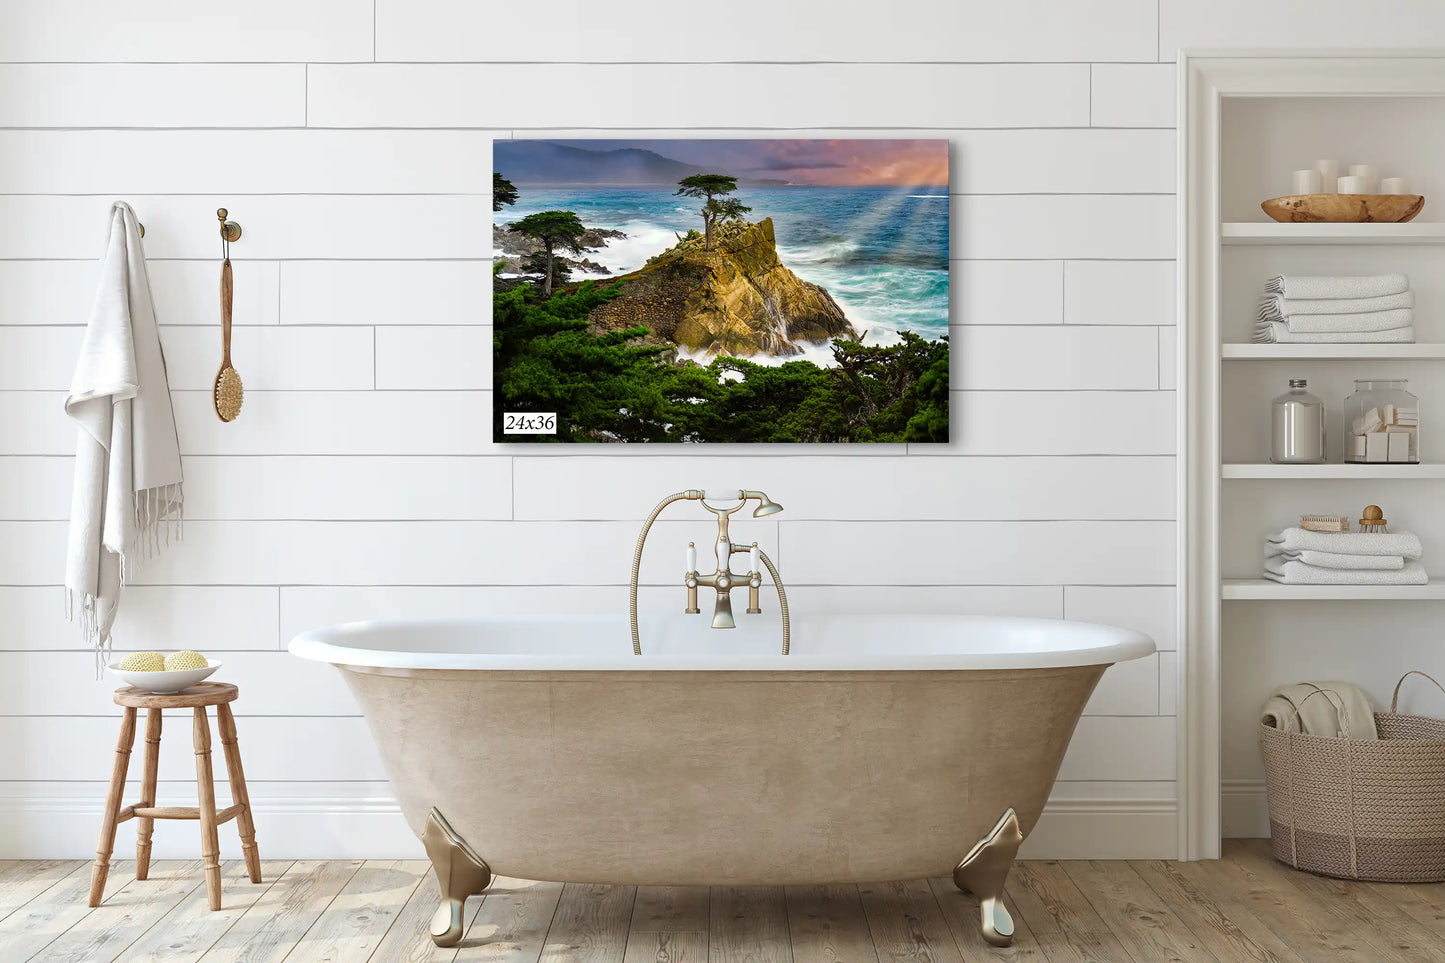 Lone Cypress Photograph Wall Decor shown in 24x36 over a bathroom tub